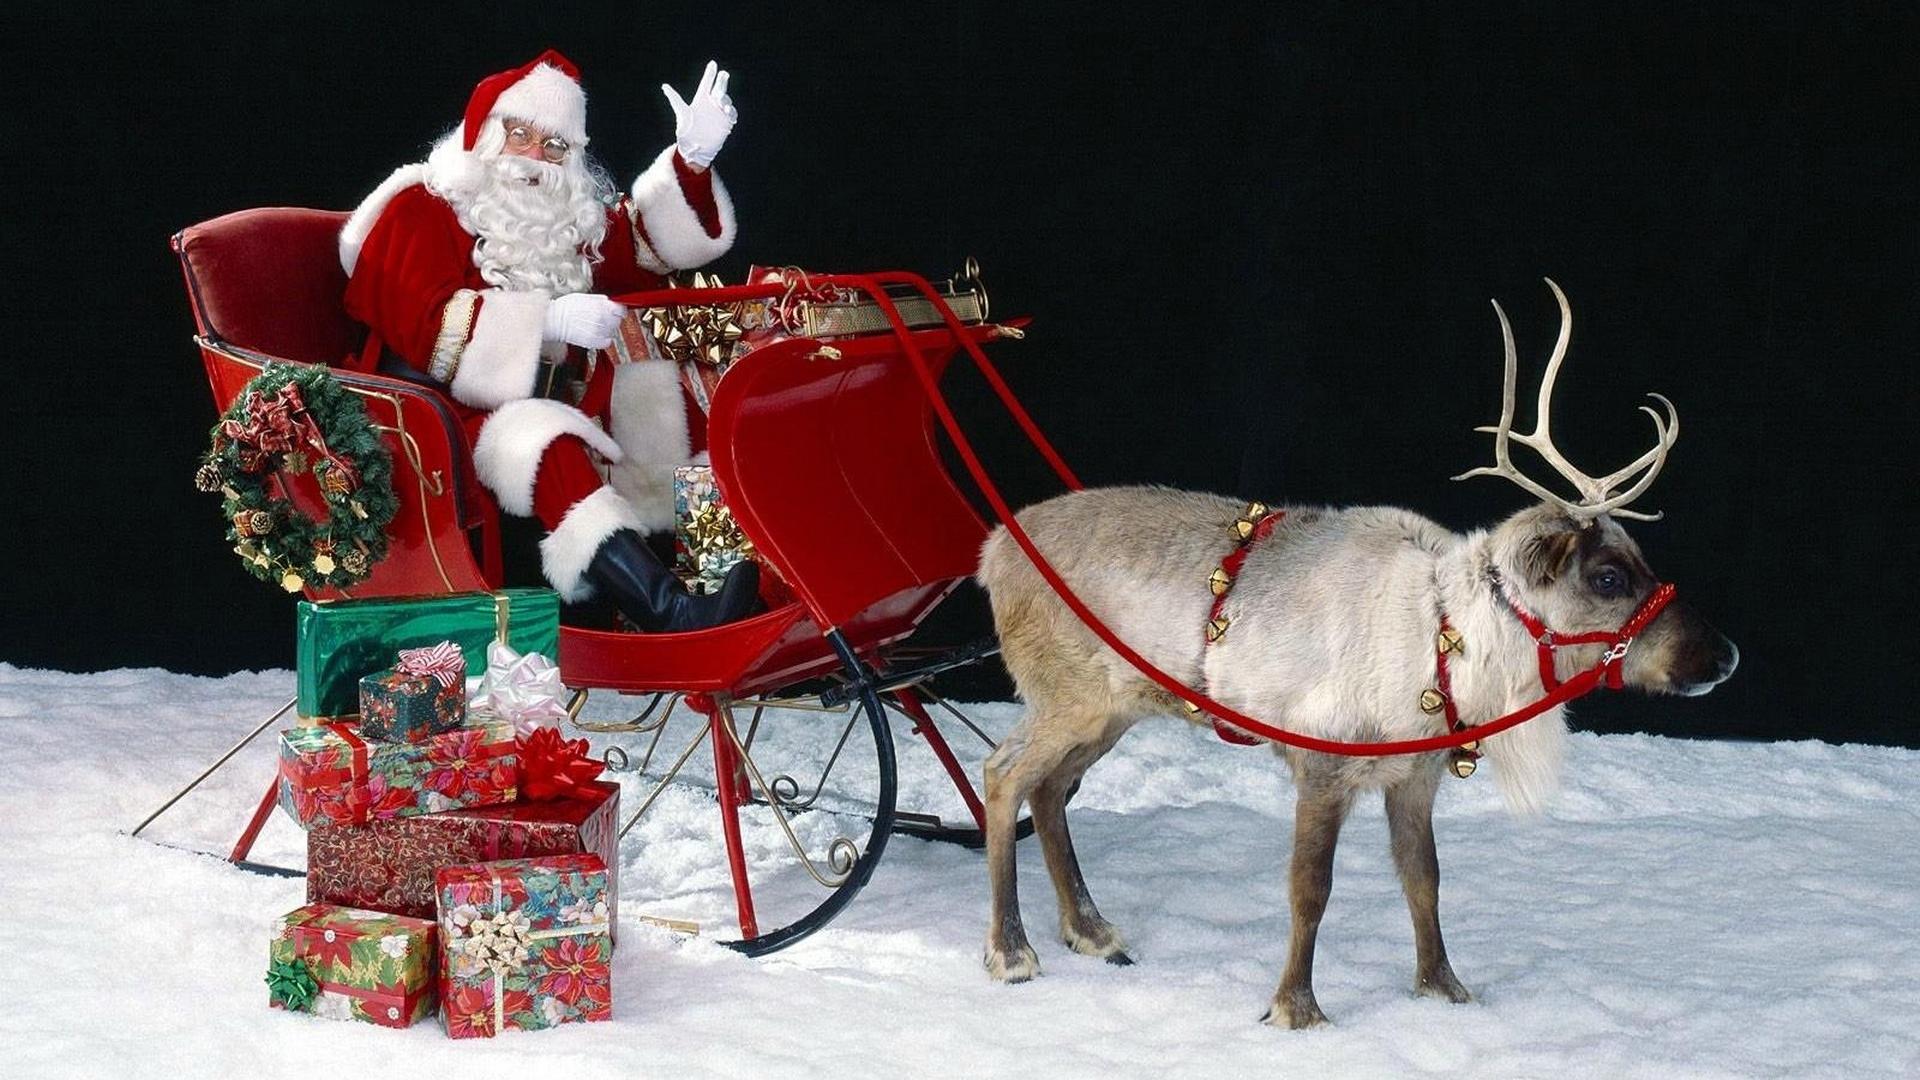 Santa On His Sleigh With Reindeer